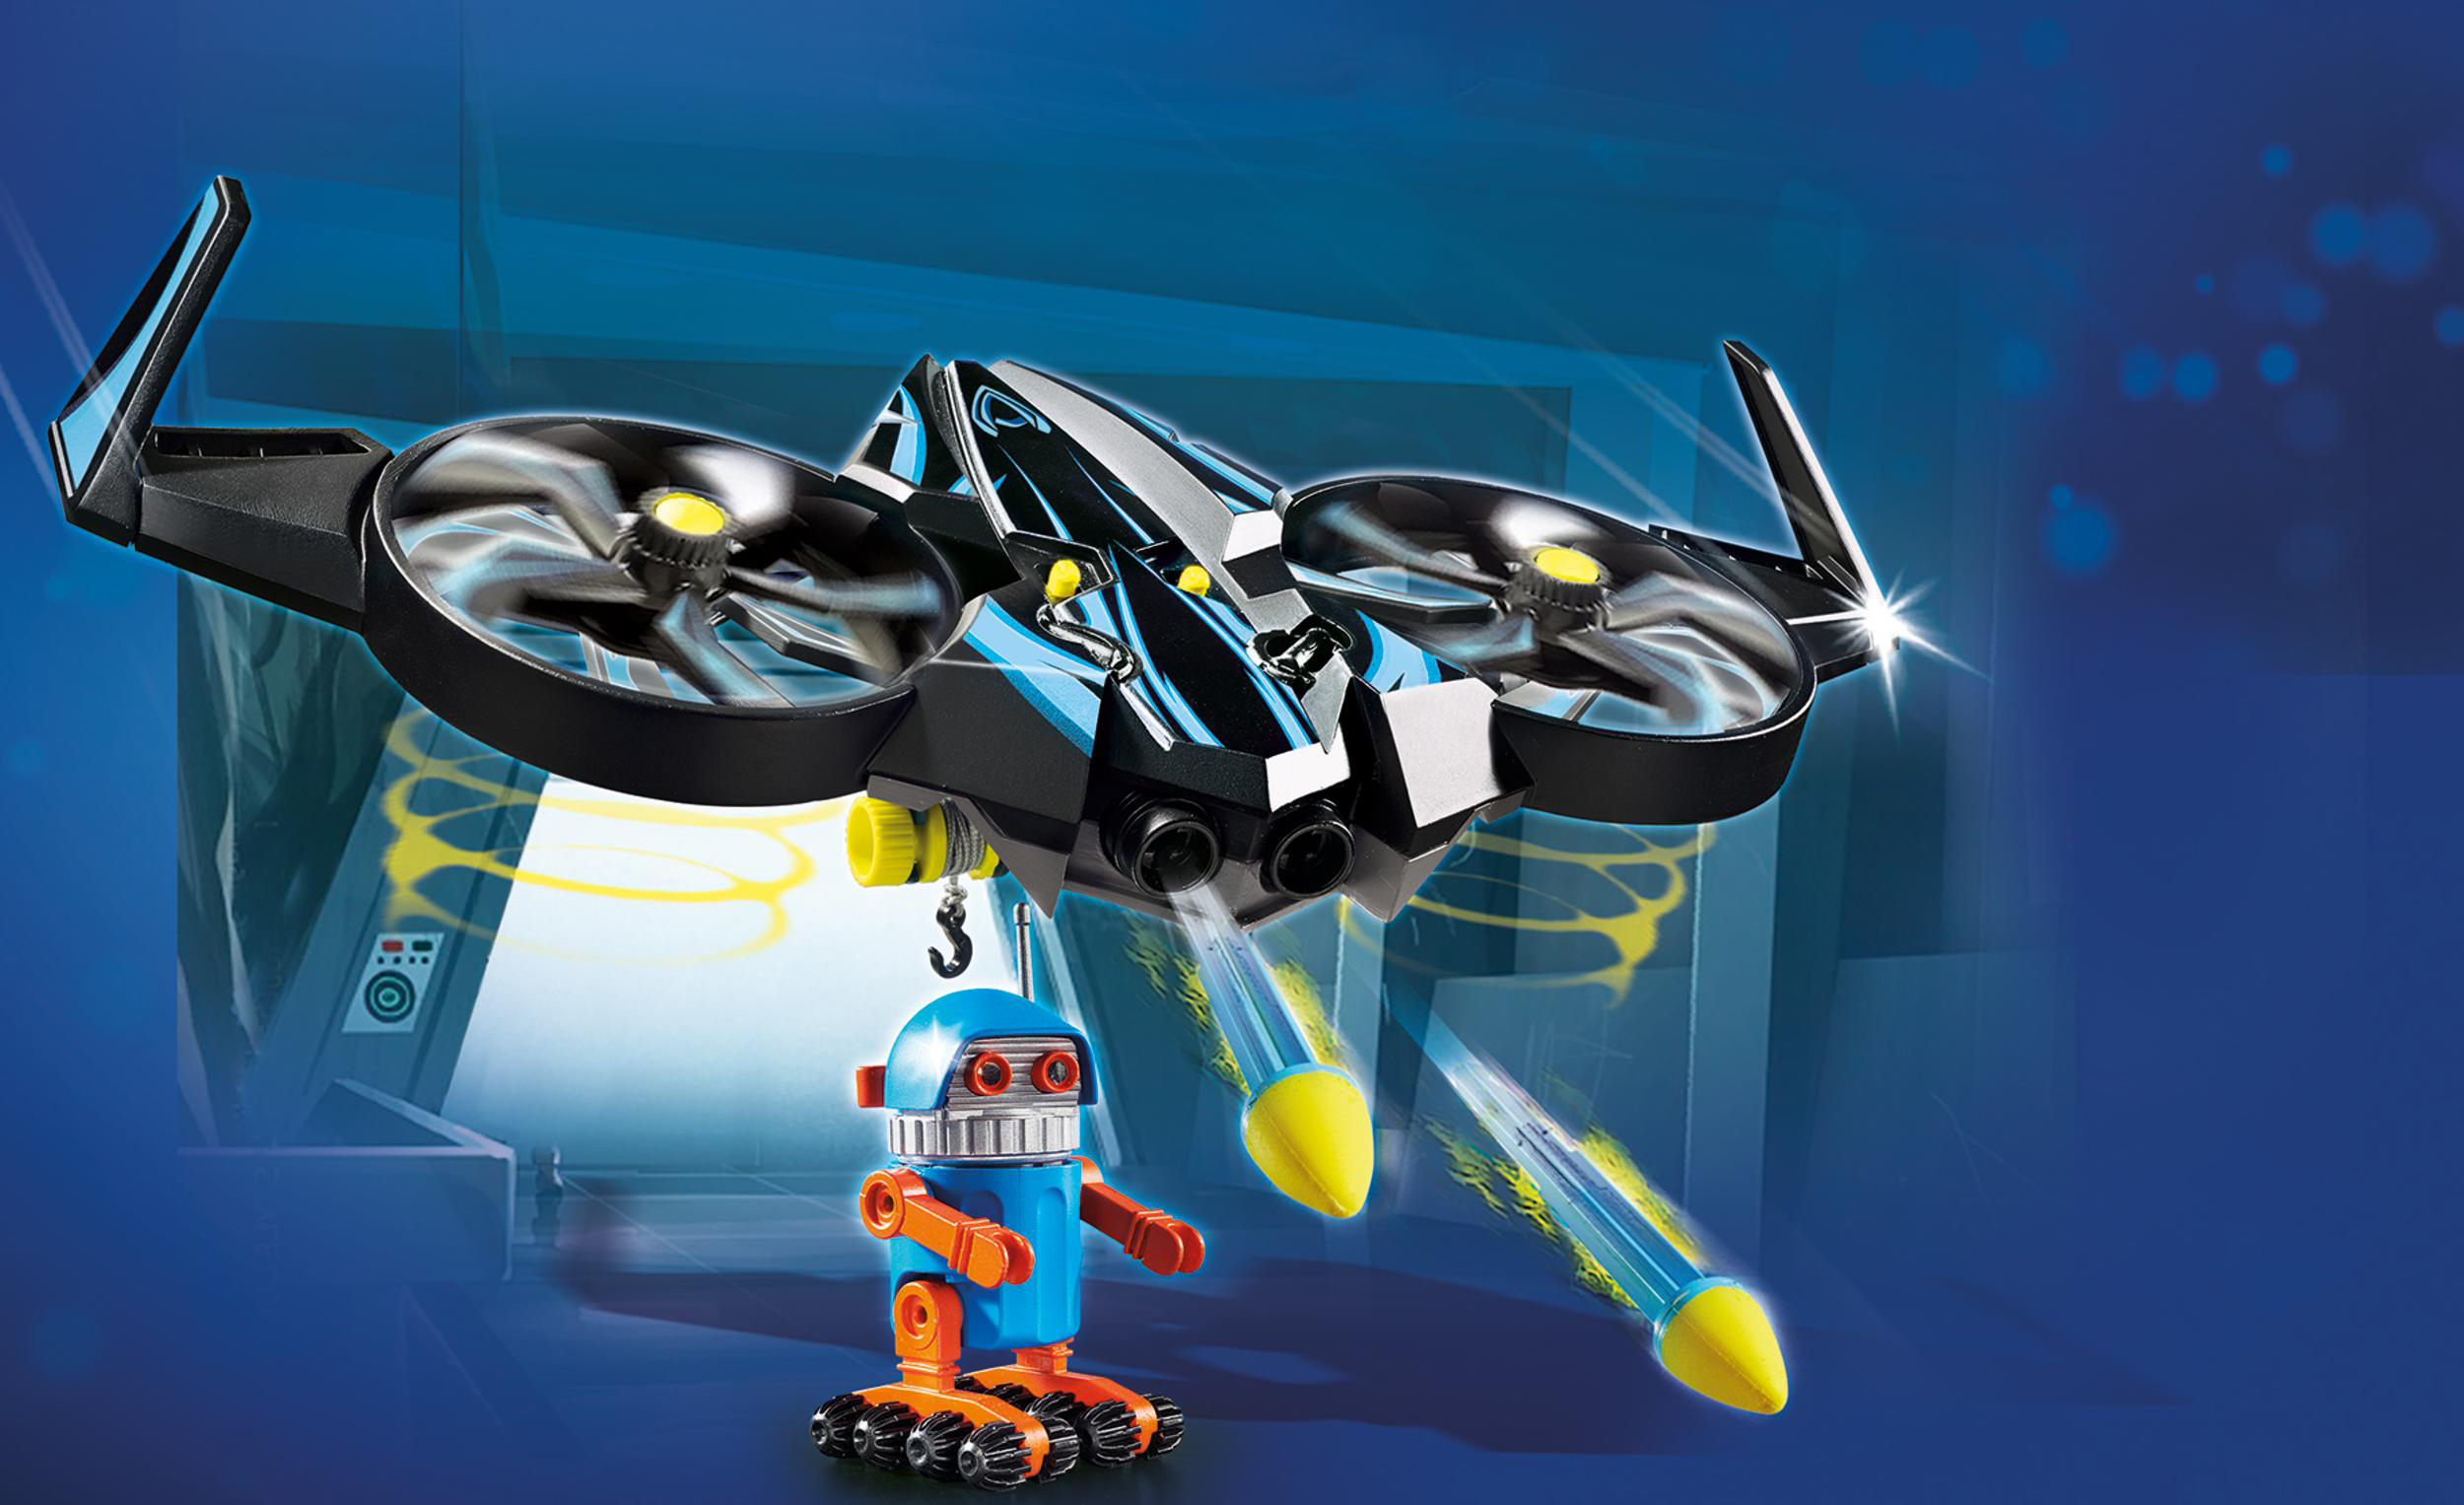 PLAYMOBIL THE MOVIE Robotitron with Drone - image 3 of 5